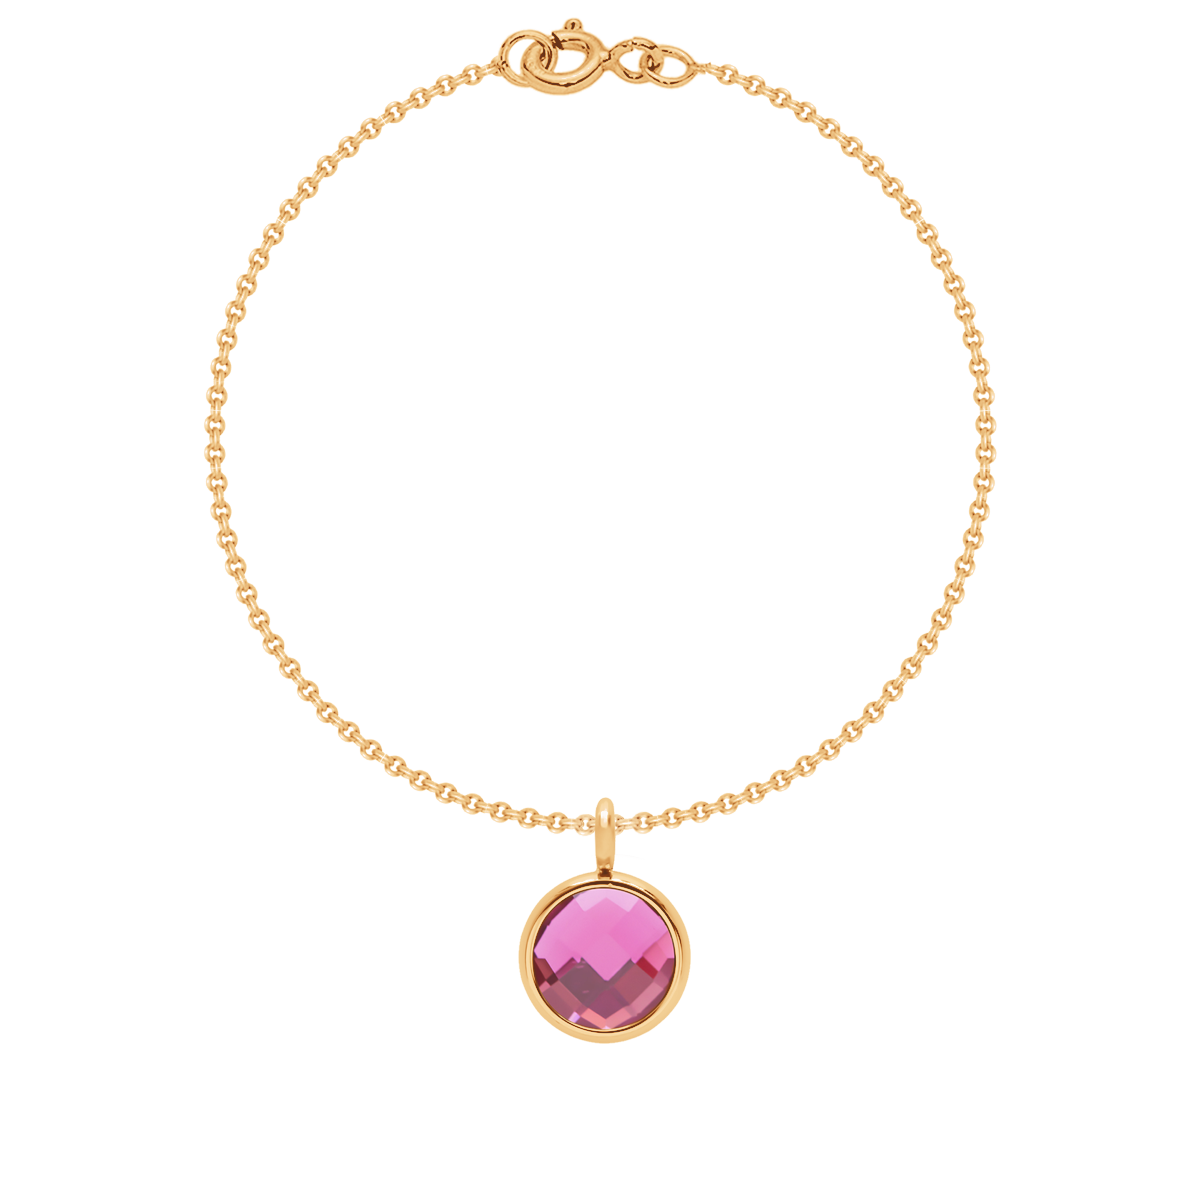 Armband klassisch mit rosa Quarz vergoldet